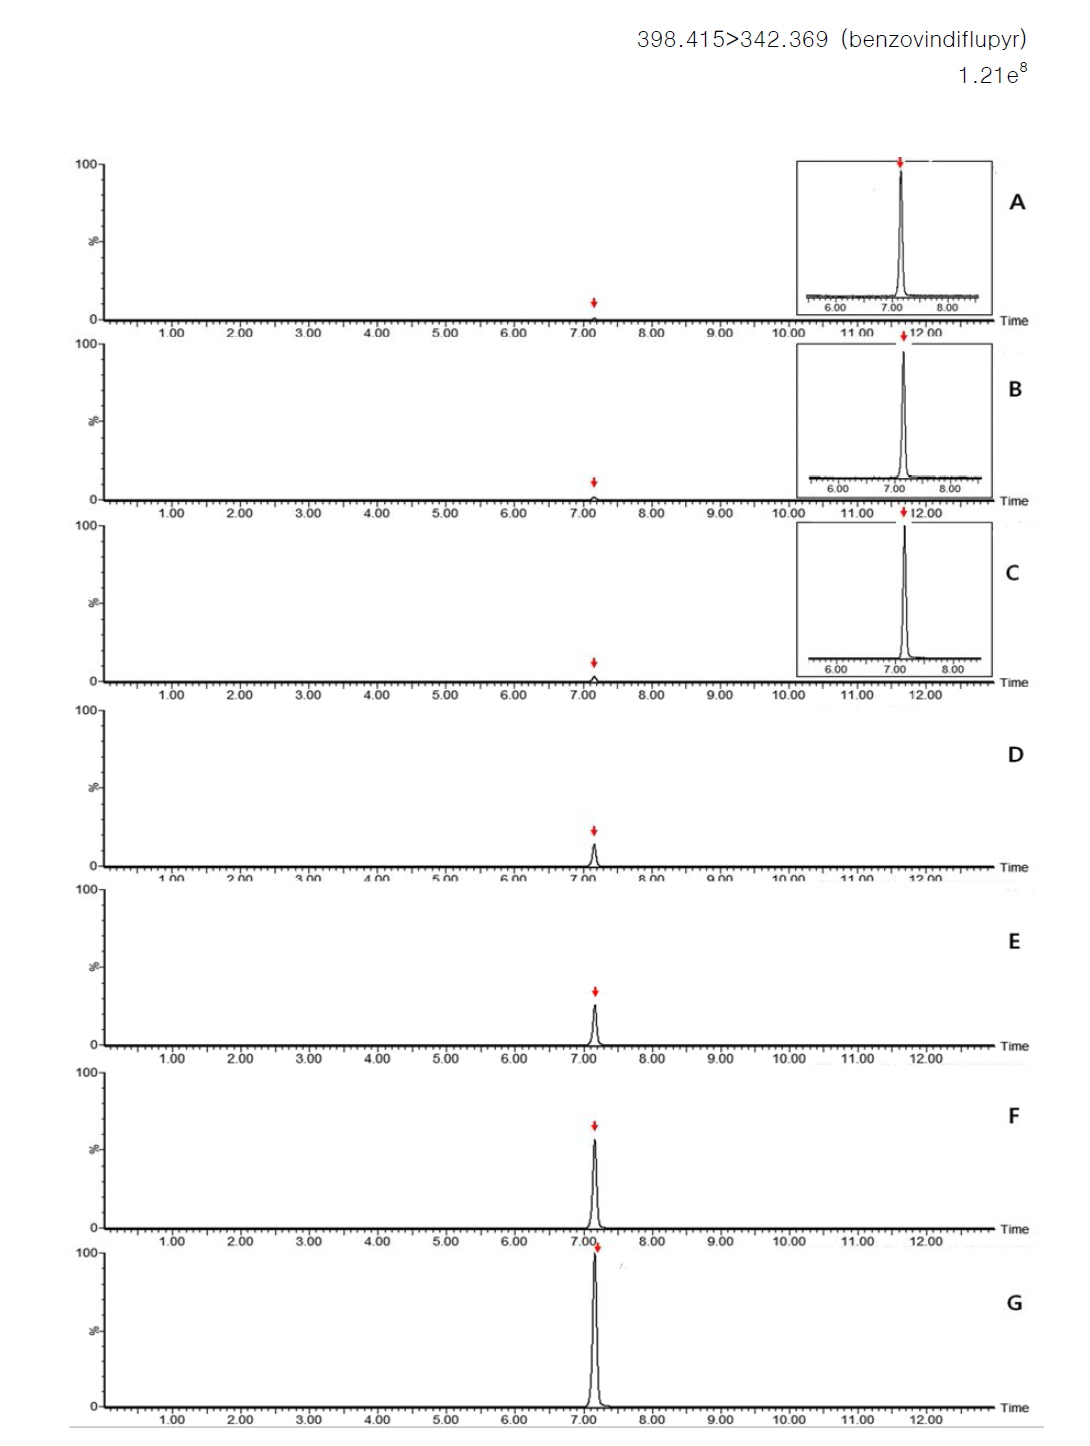 LC-MS/MS chromatograms of benzovindiflupyr standard in huelled rice matrix (A) 0.001 mg/kg, (B) 0.005 mg/kg, (C) 0.01 mg/kg, (D) 0.05 mg/kg, (E) 0.1 mg/kg, (F) 0.25 mg/kg and (G) 0.5 mg/kg